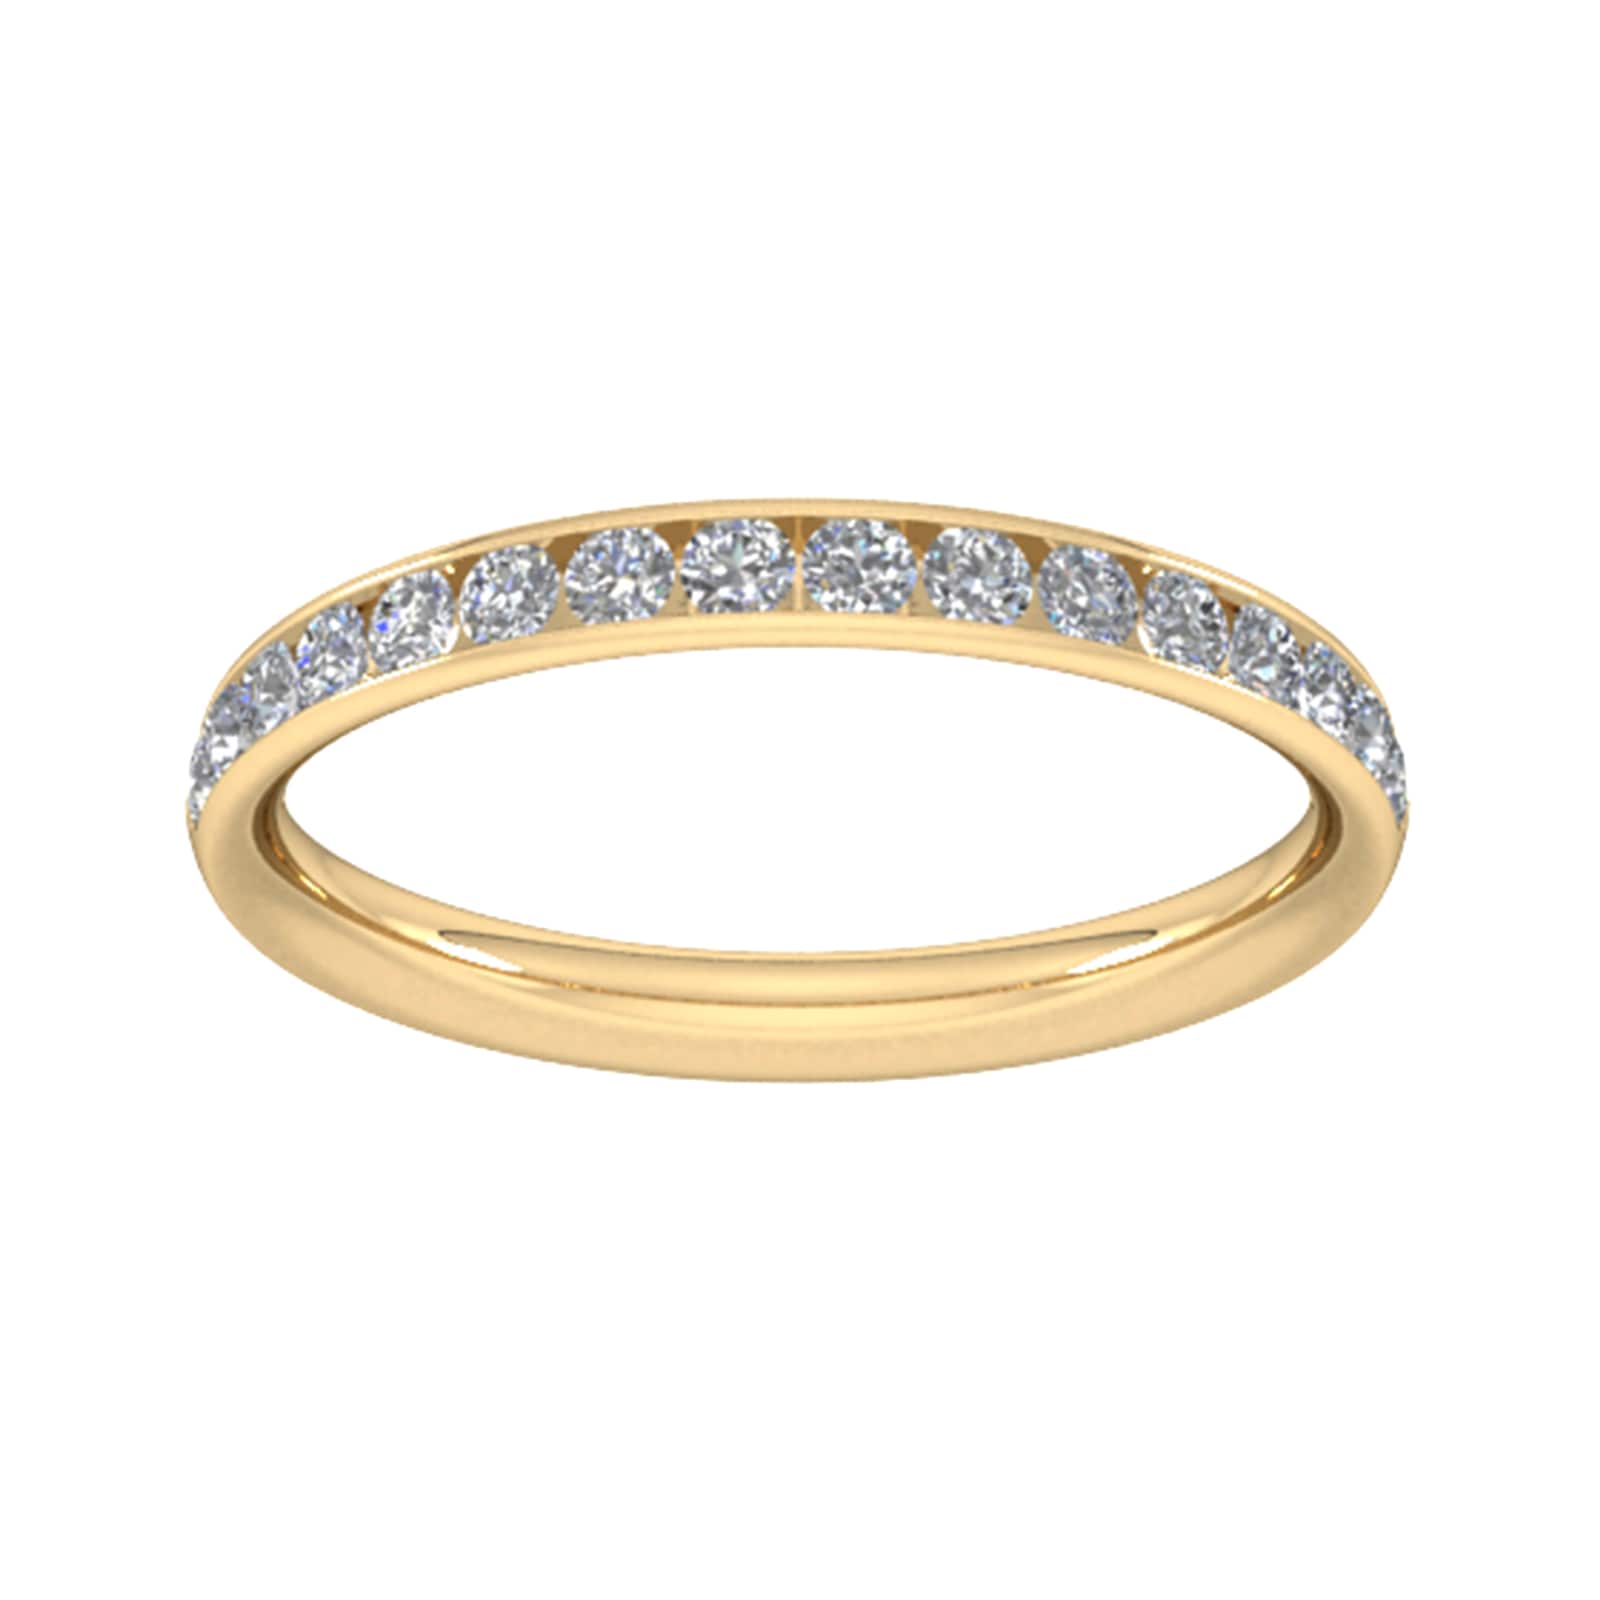 0.44 Carat Total Weight Half Channel Set Brilliant Cut Diamond Wedding Ring In 9 Carat Yellow Gold - Ring Size U